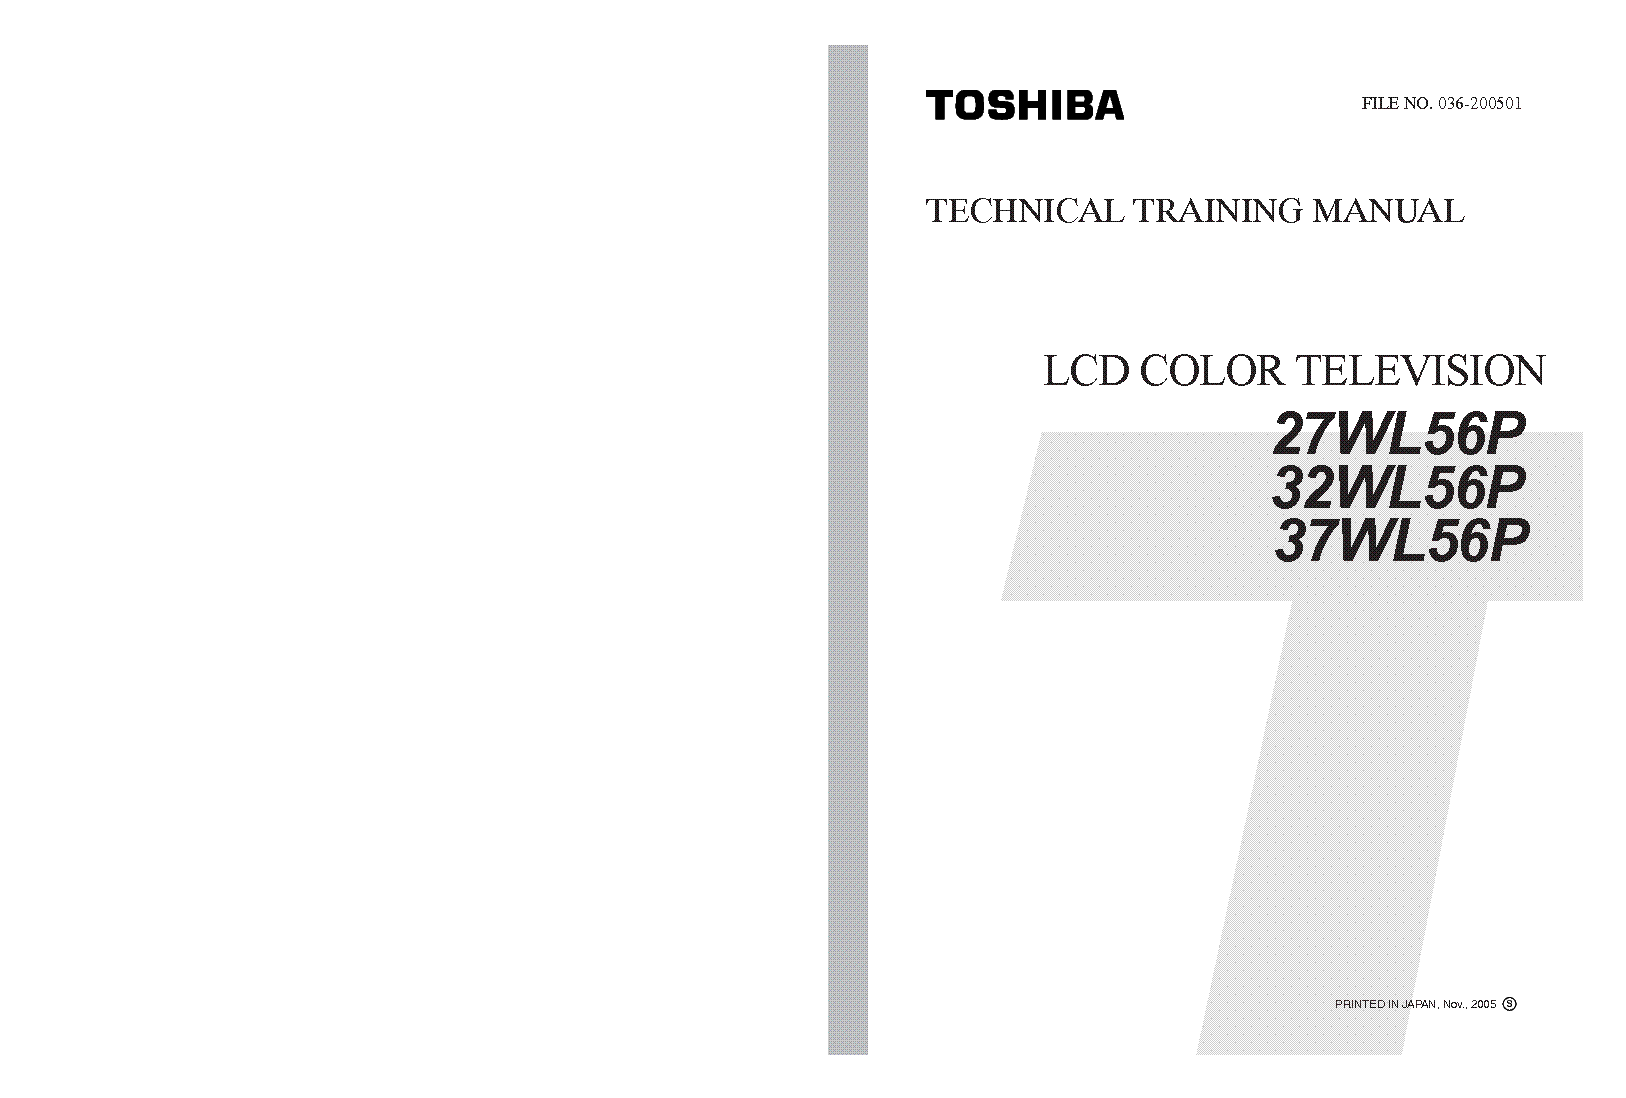 TOSHIBA 27WL56P-32WL56P-37WL56PTRAINING service manual (1st page)